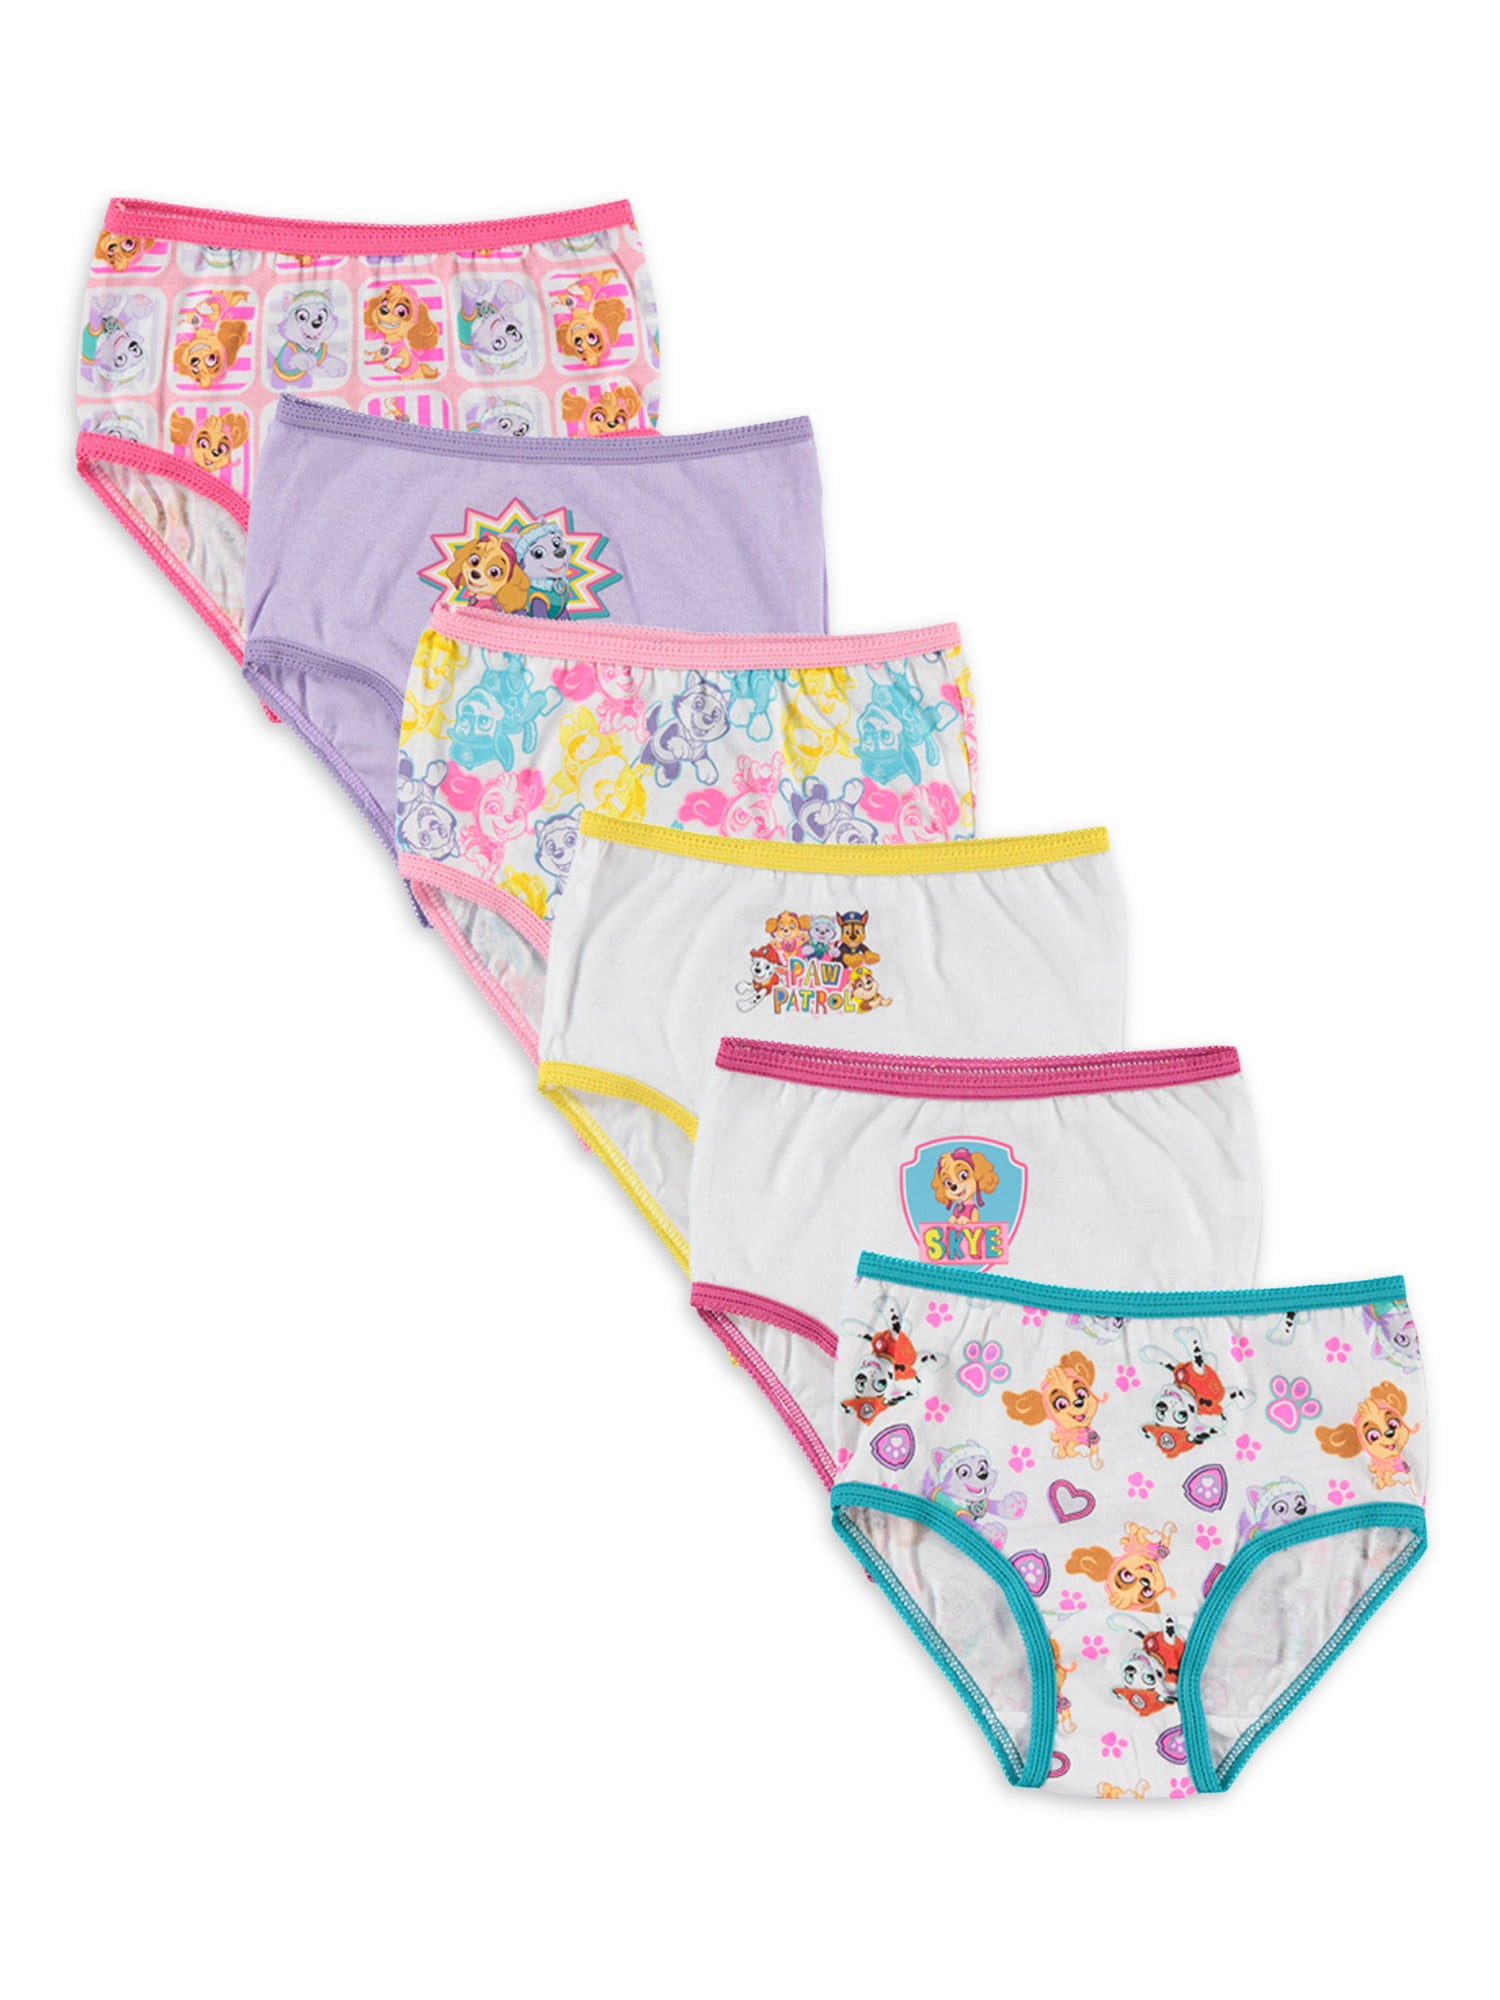 6 pack of 4T Toddler Boys PAW PATROL Underwear Briefs - Size 4T